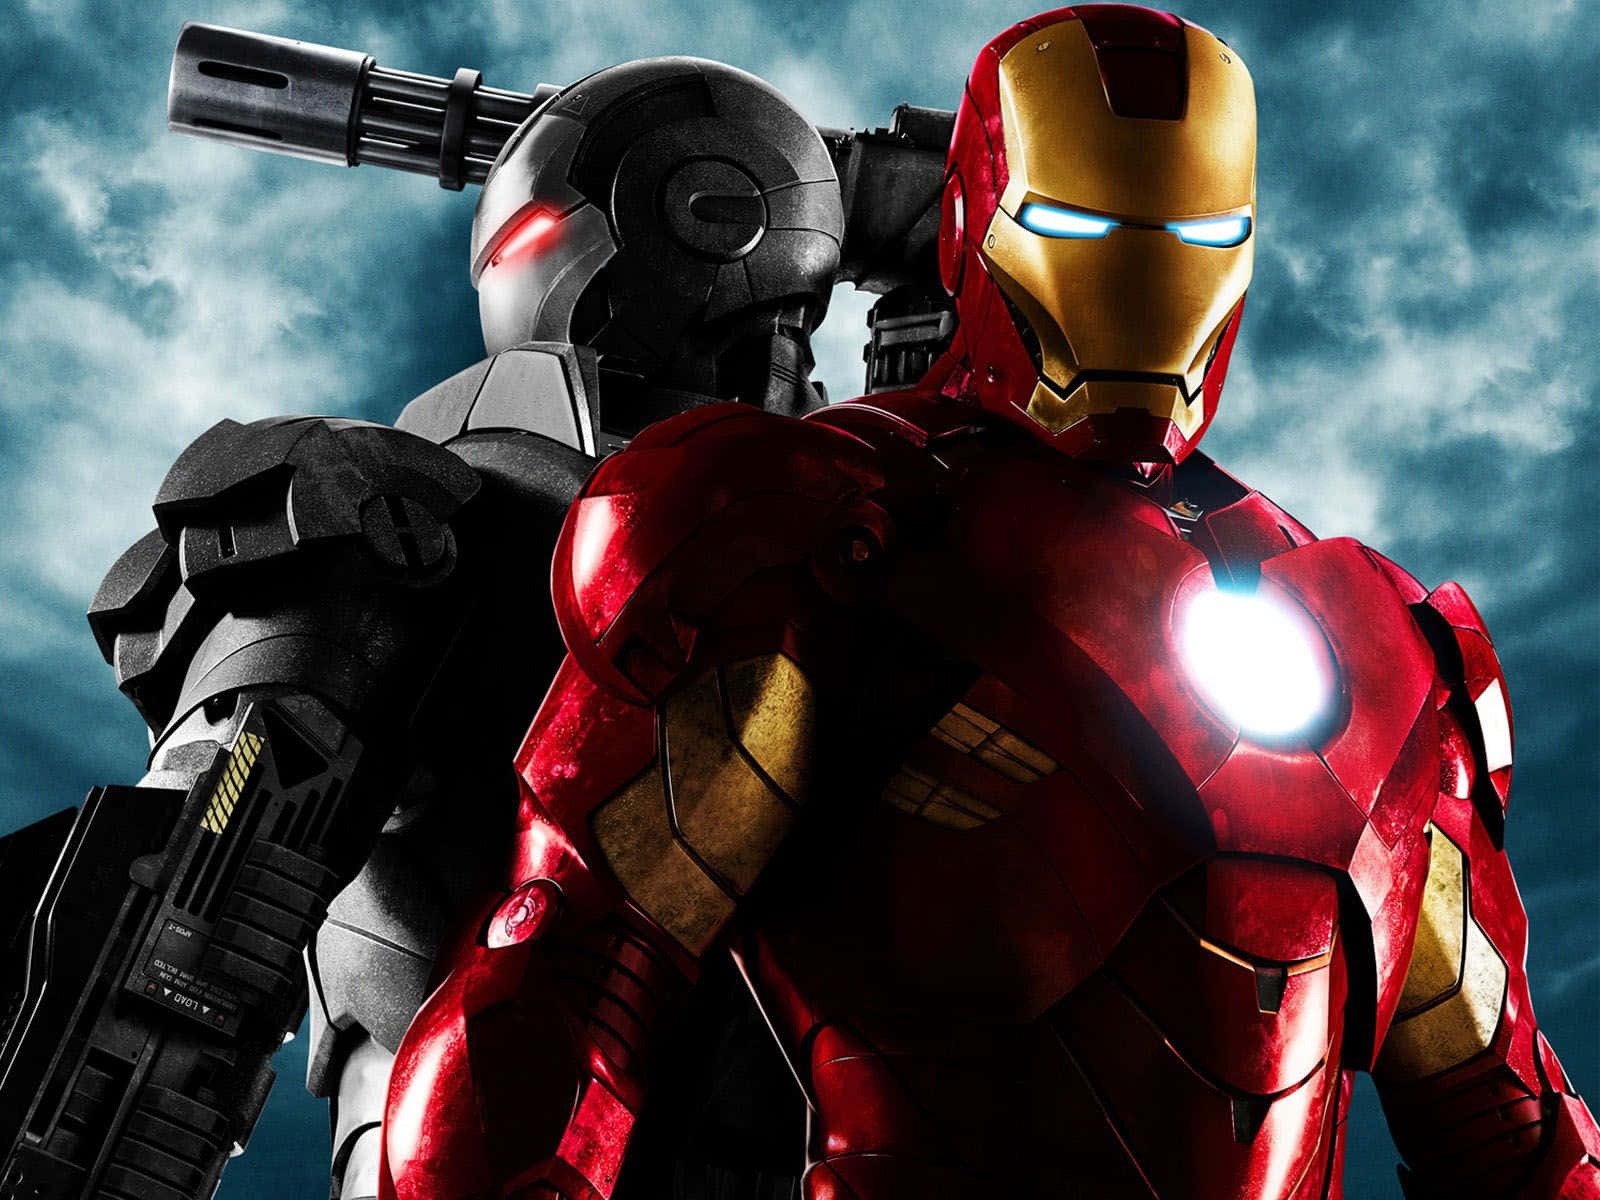 Iron Man 3 Poster With War Machine